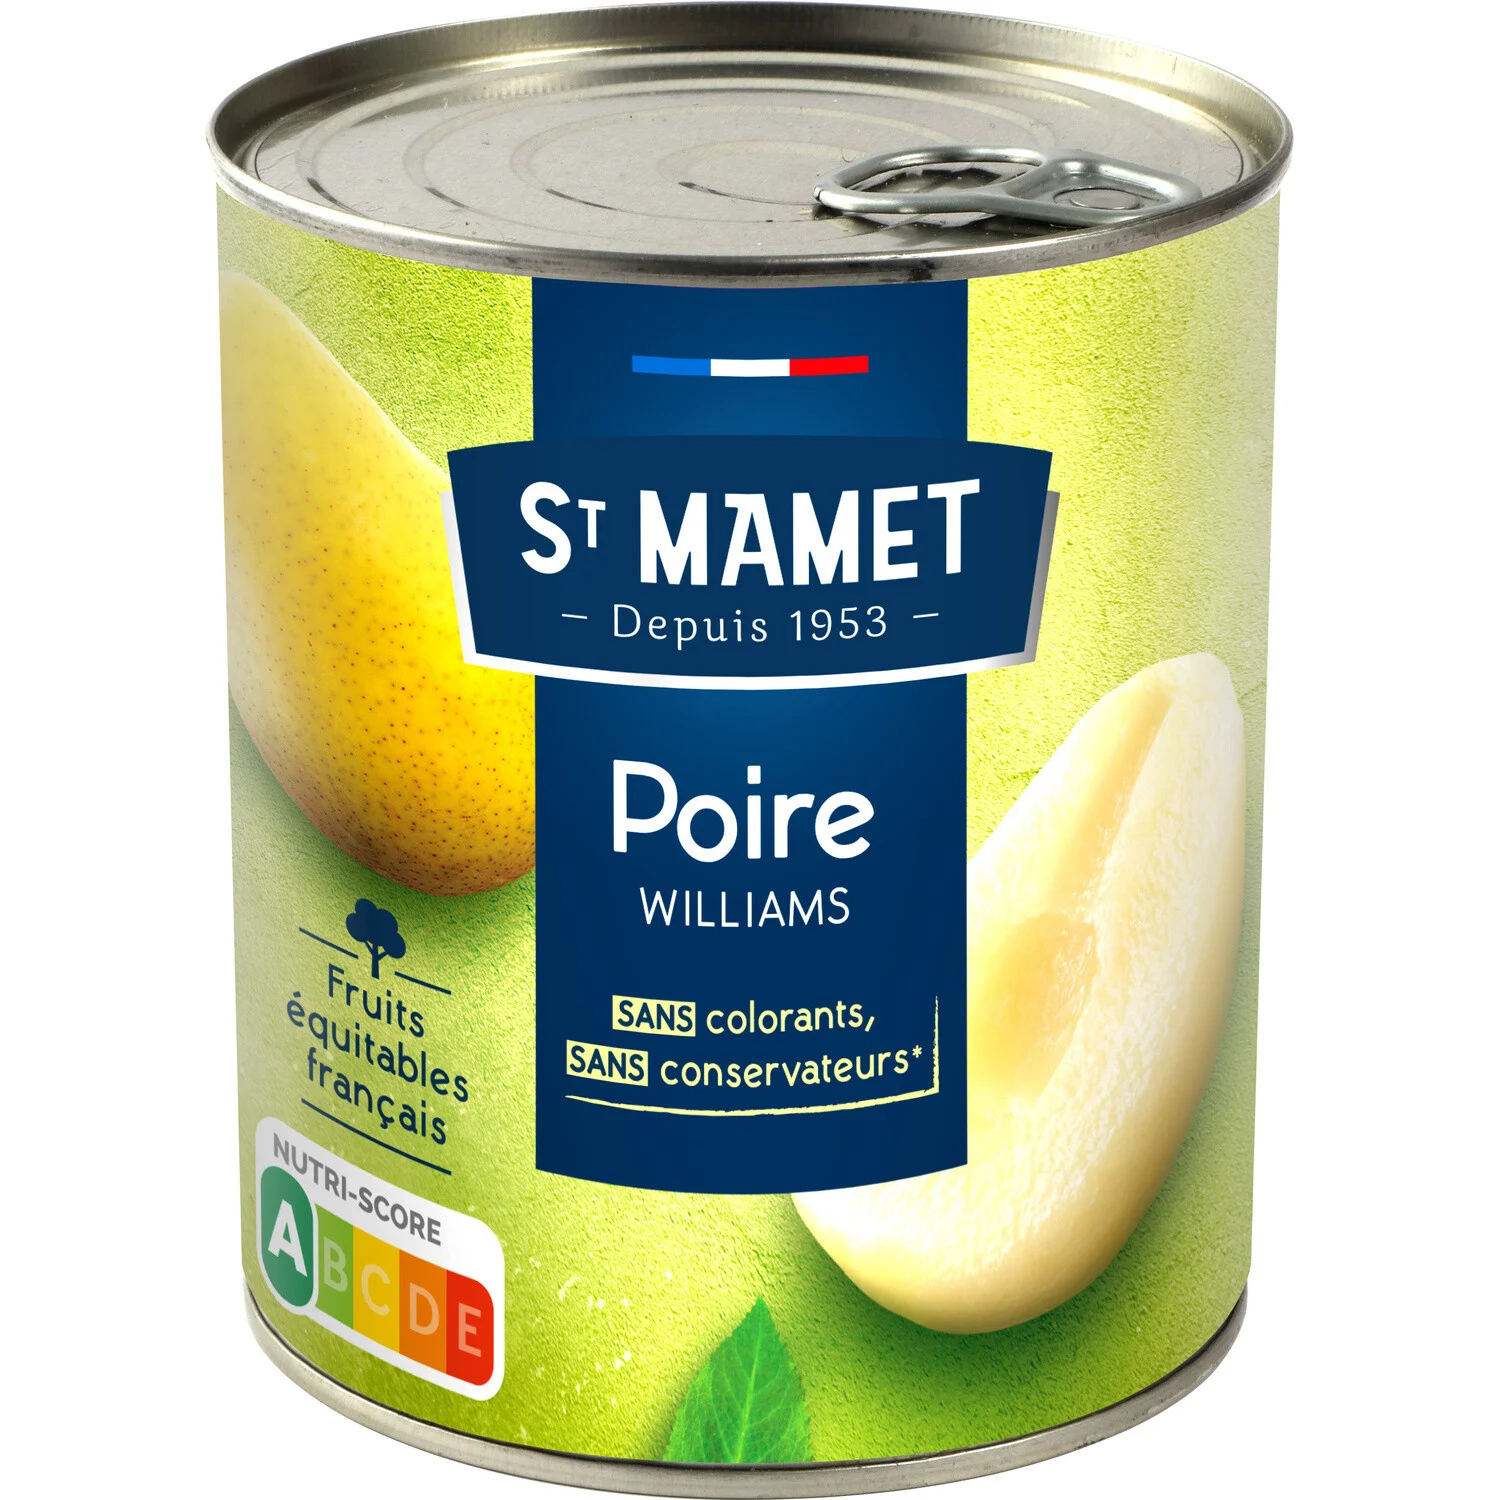 Fruits Au Sirop Demi-poires Williams 850g - St Mamet